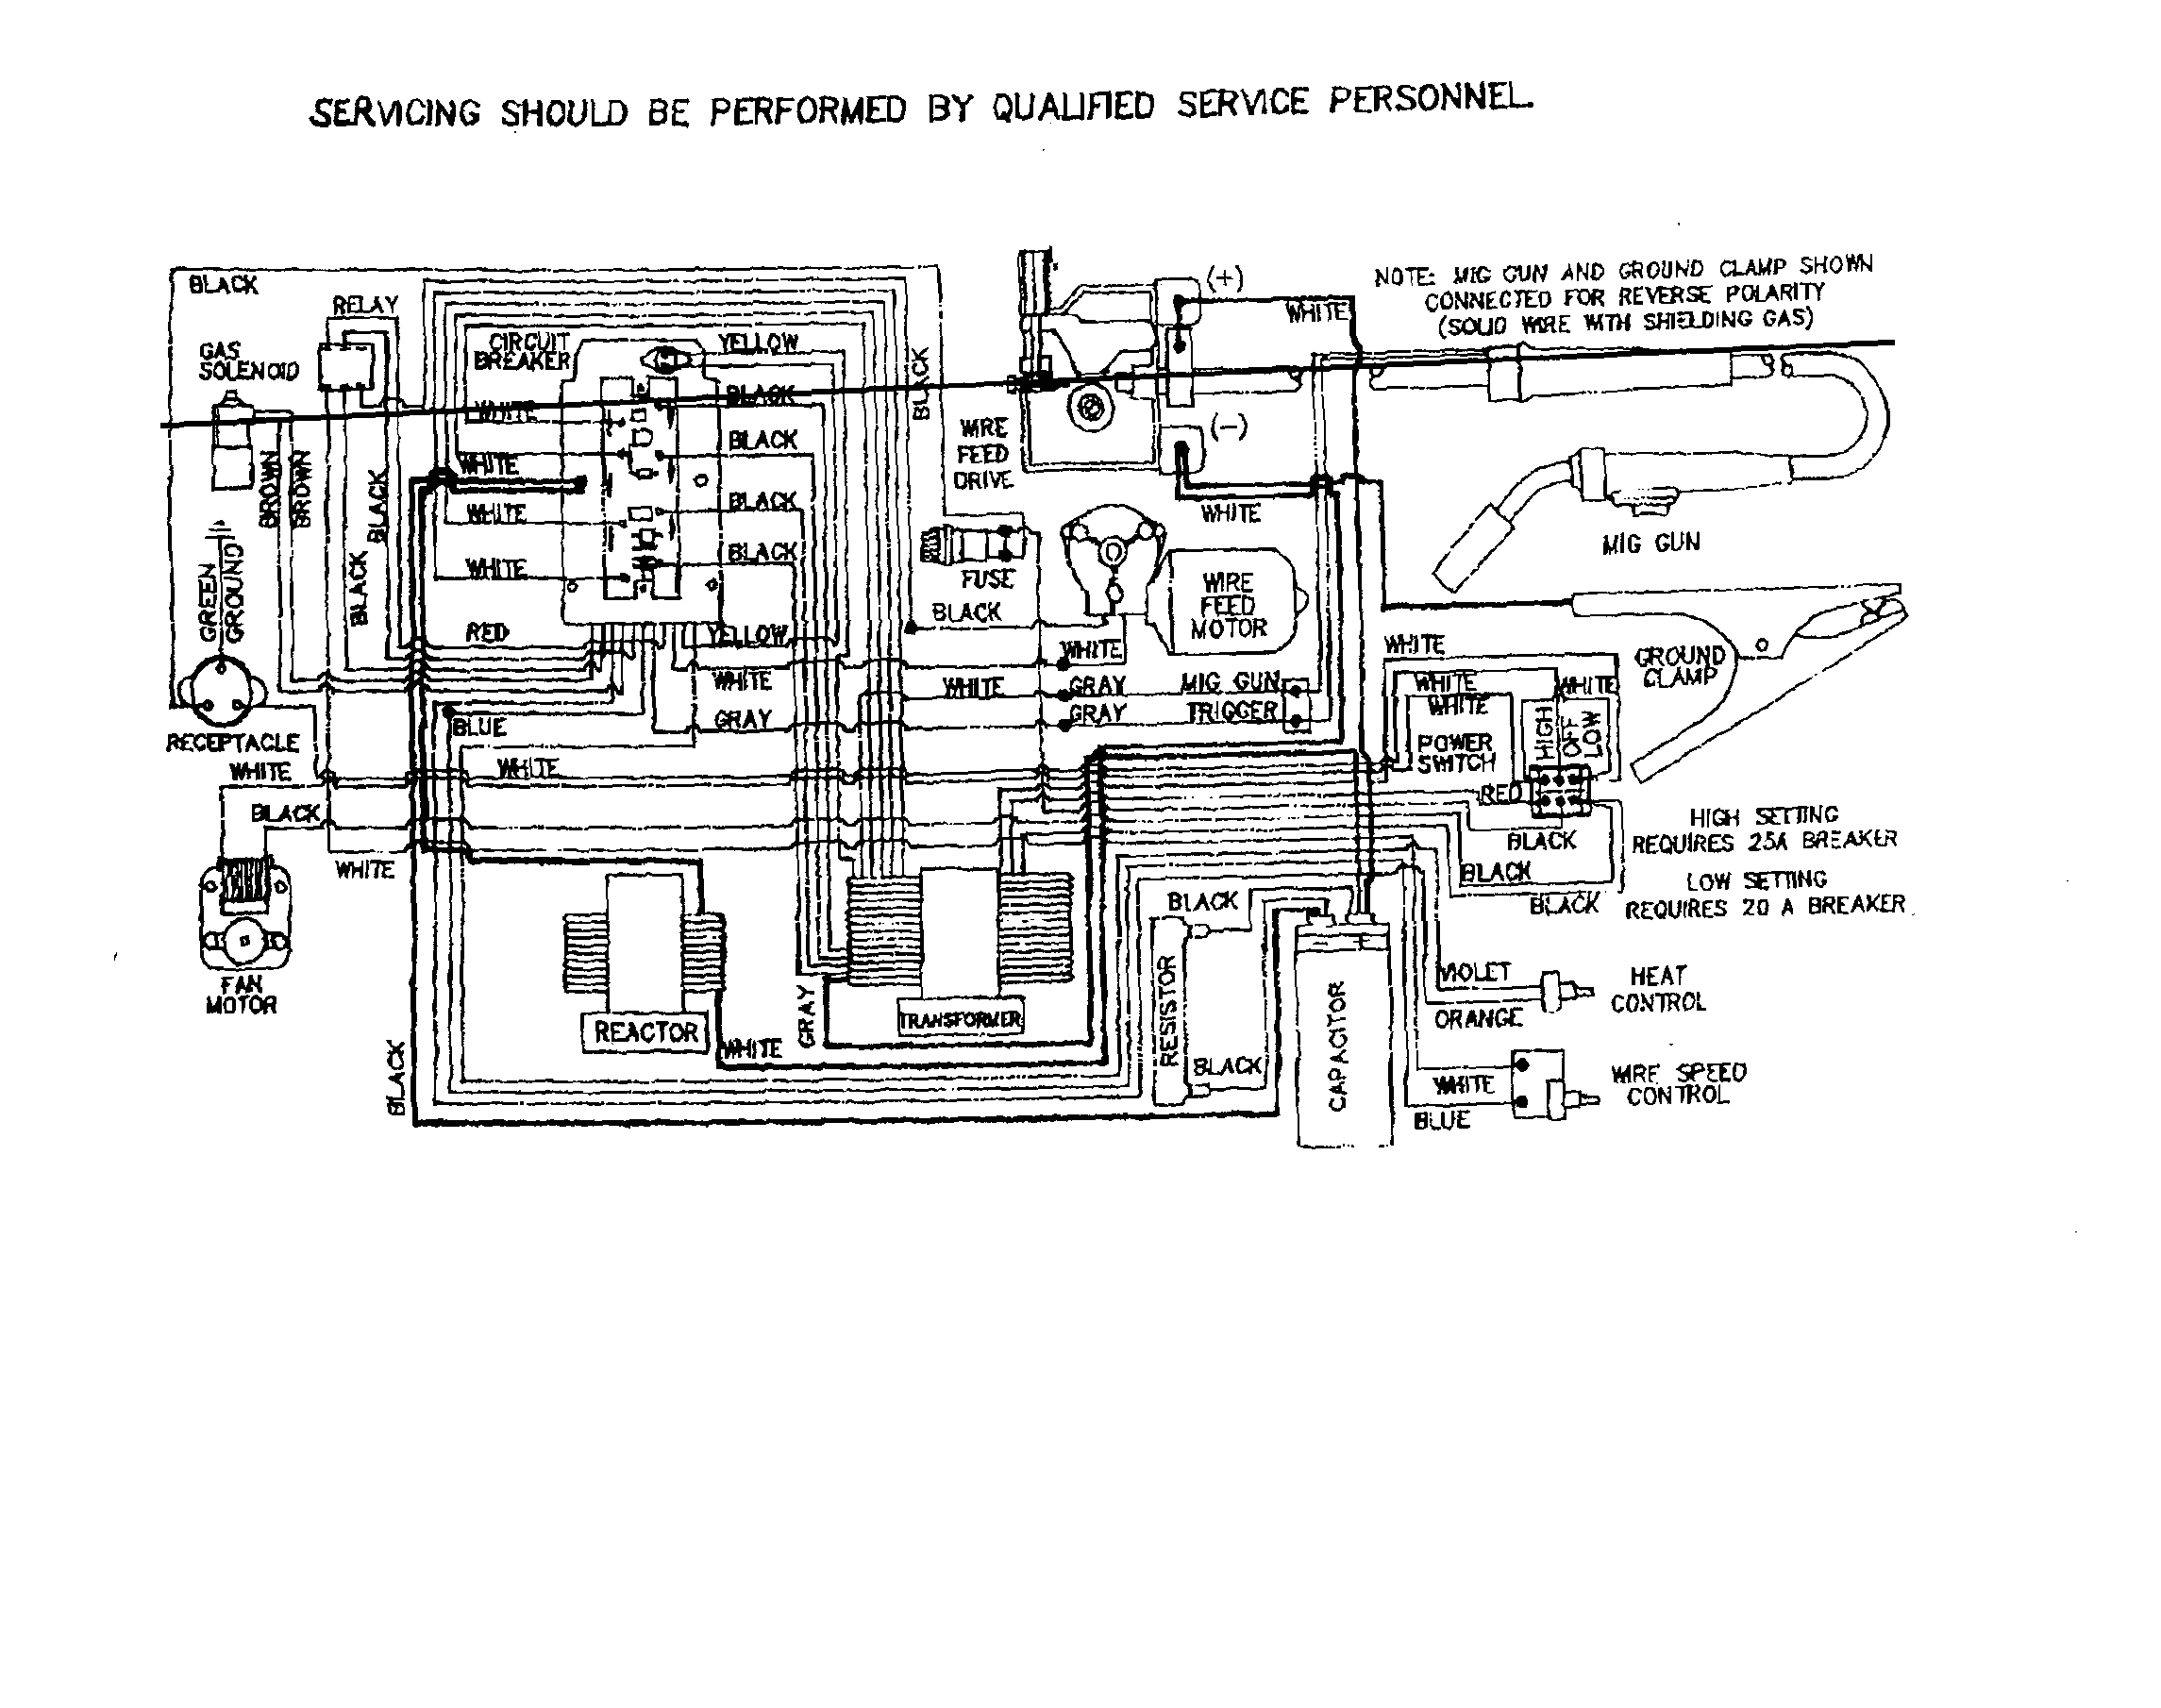 wire feed motor diagram wiring diagram structure wire feed motor diagram